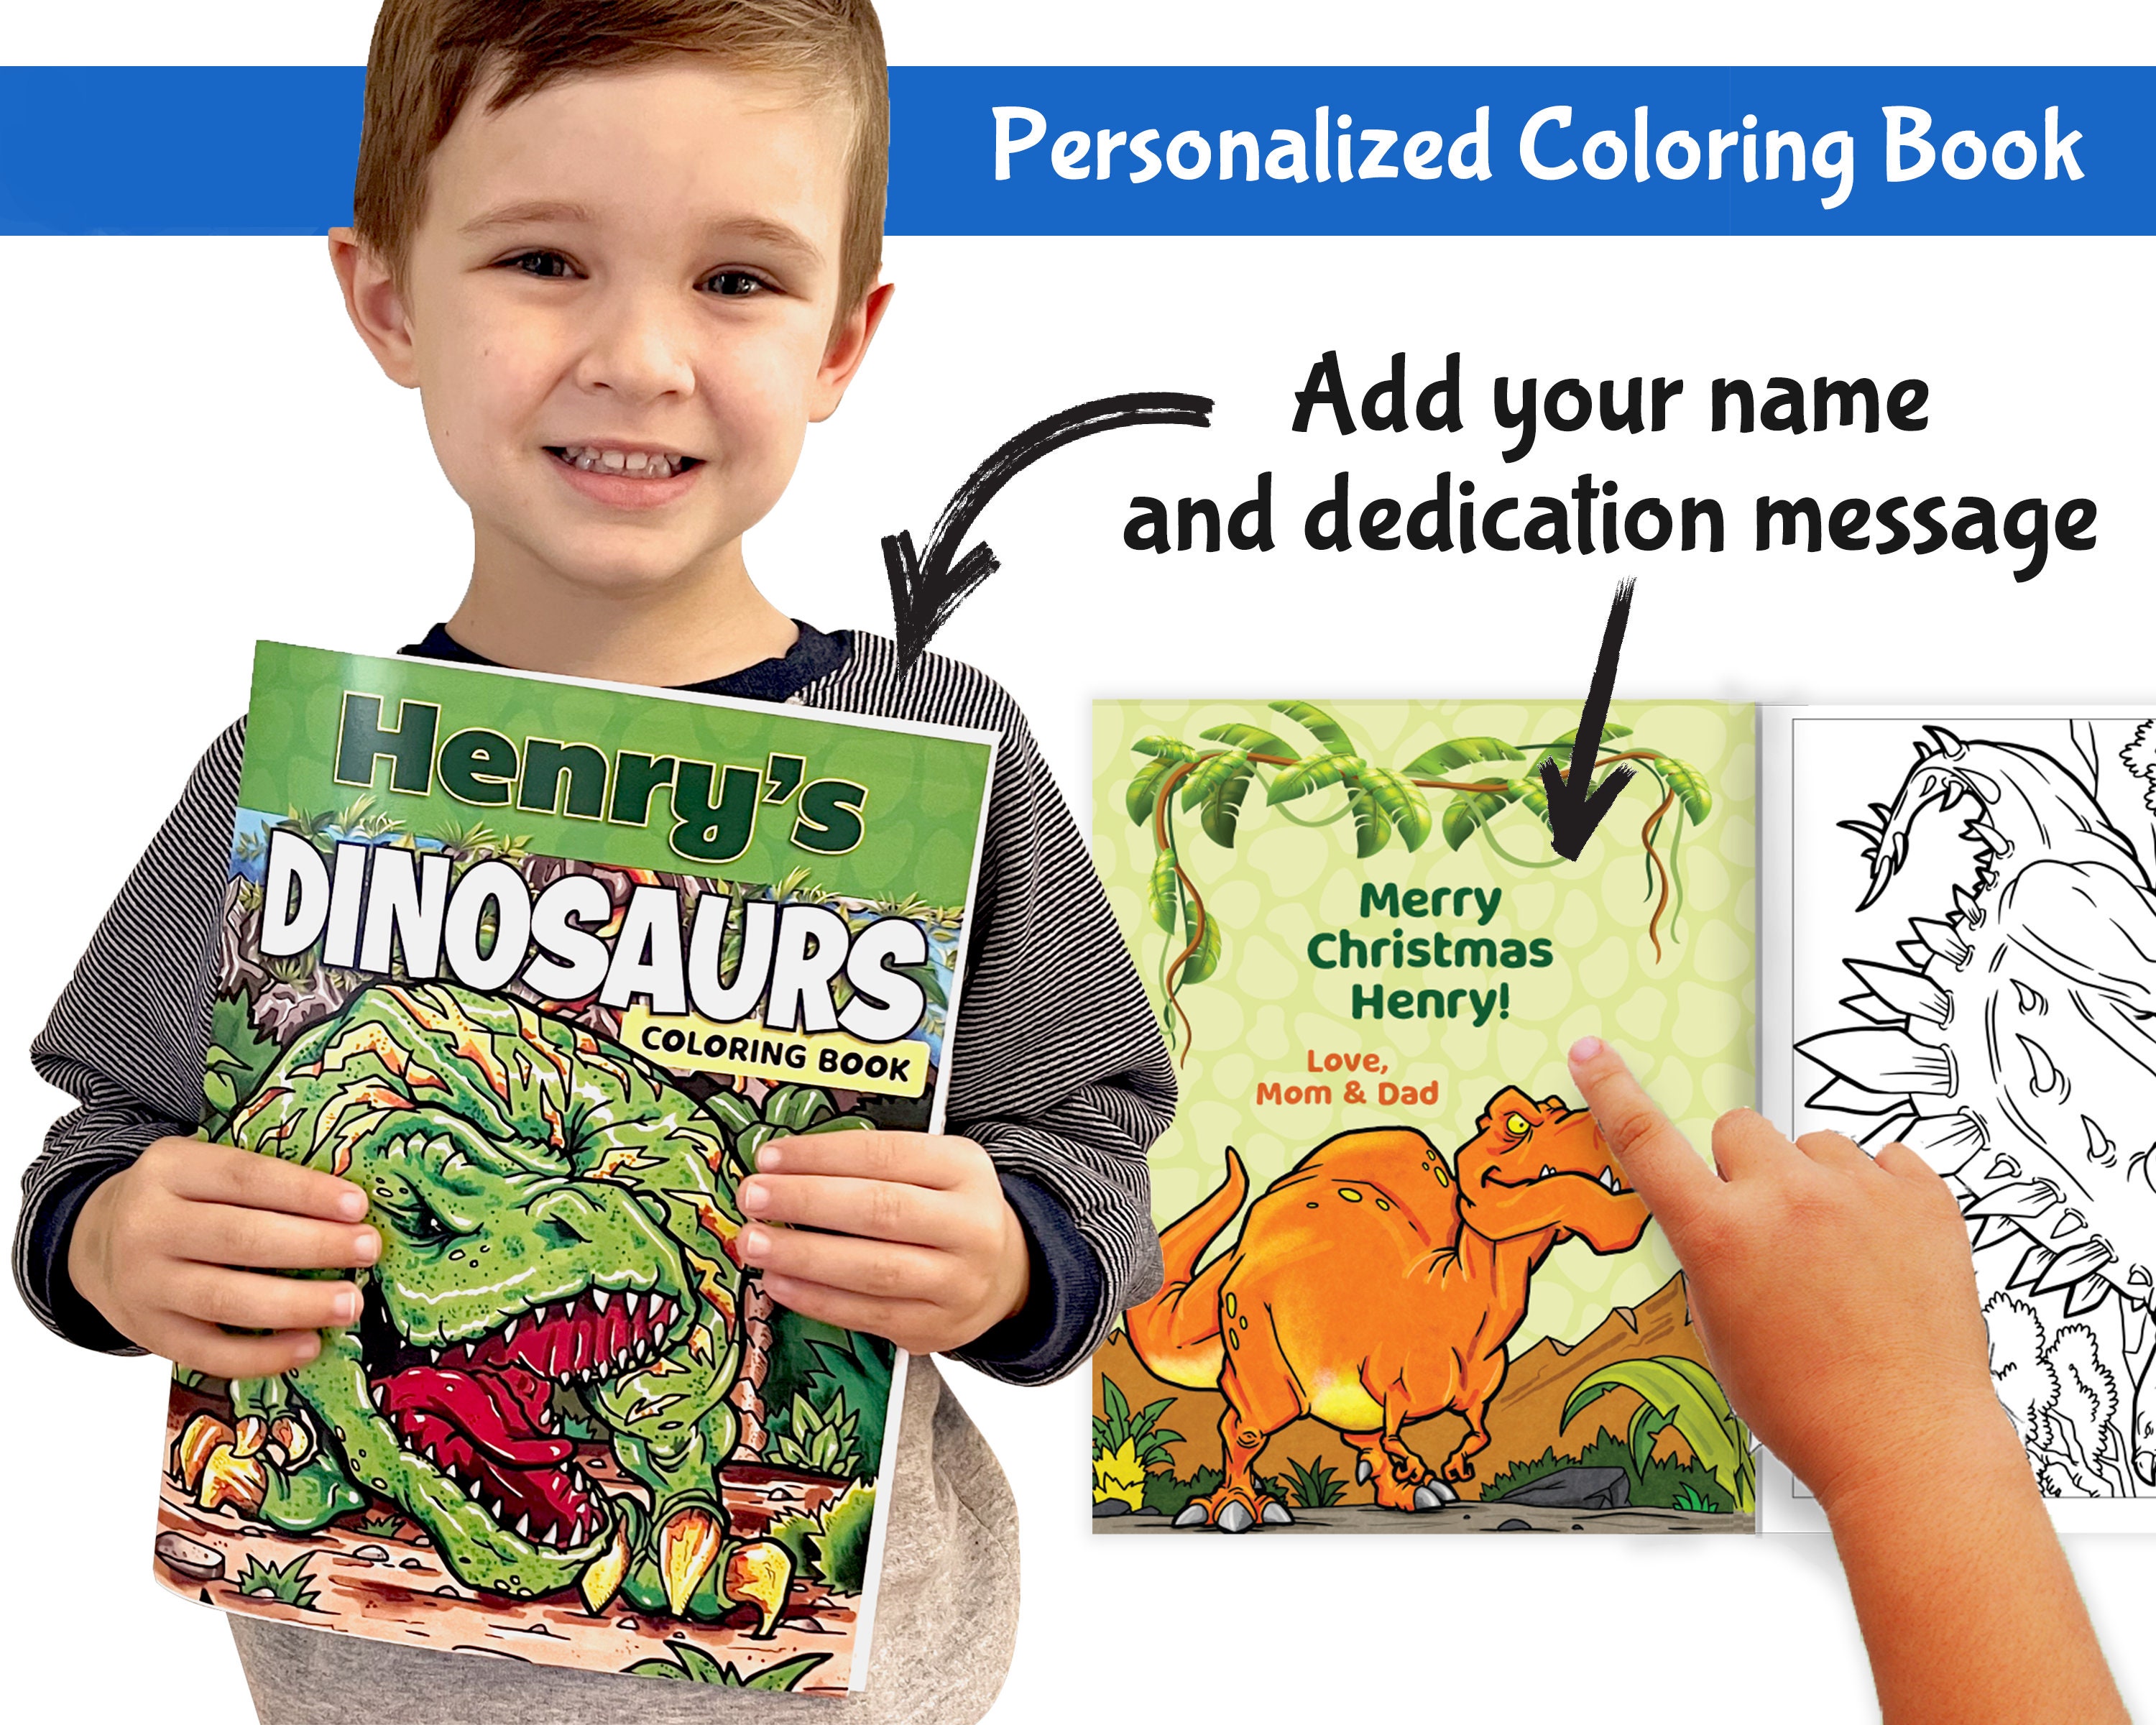 Dinosaurio Libro de Colorear: Para Niños de 4 a 8 Años, Dino Prehistórico  Para Colorear Para Niños y Niñas (Libros Para Colorear Niños)